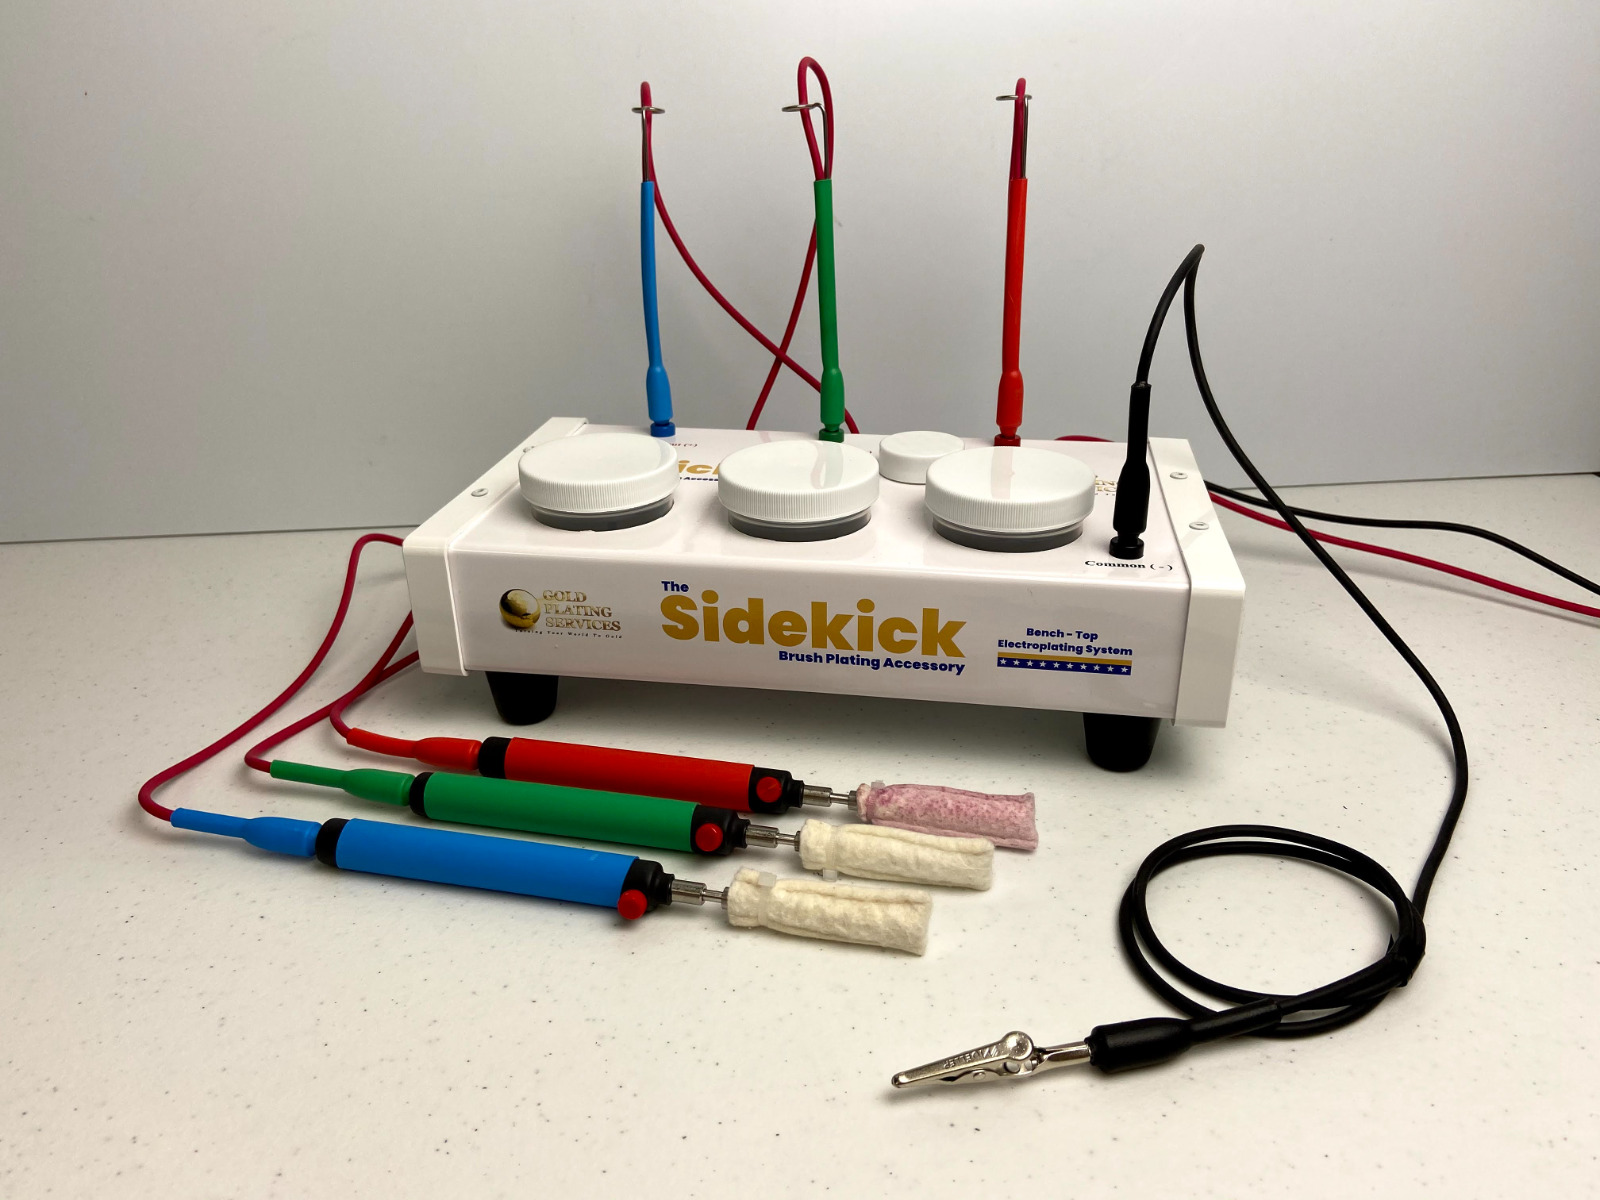 4 oz Gold Electroplating Kit with The Sidekick